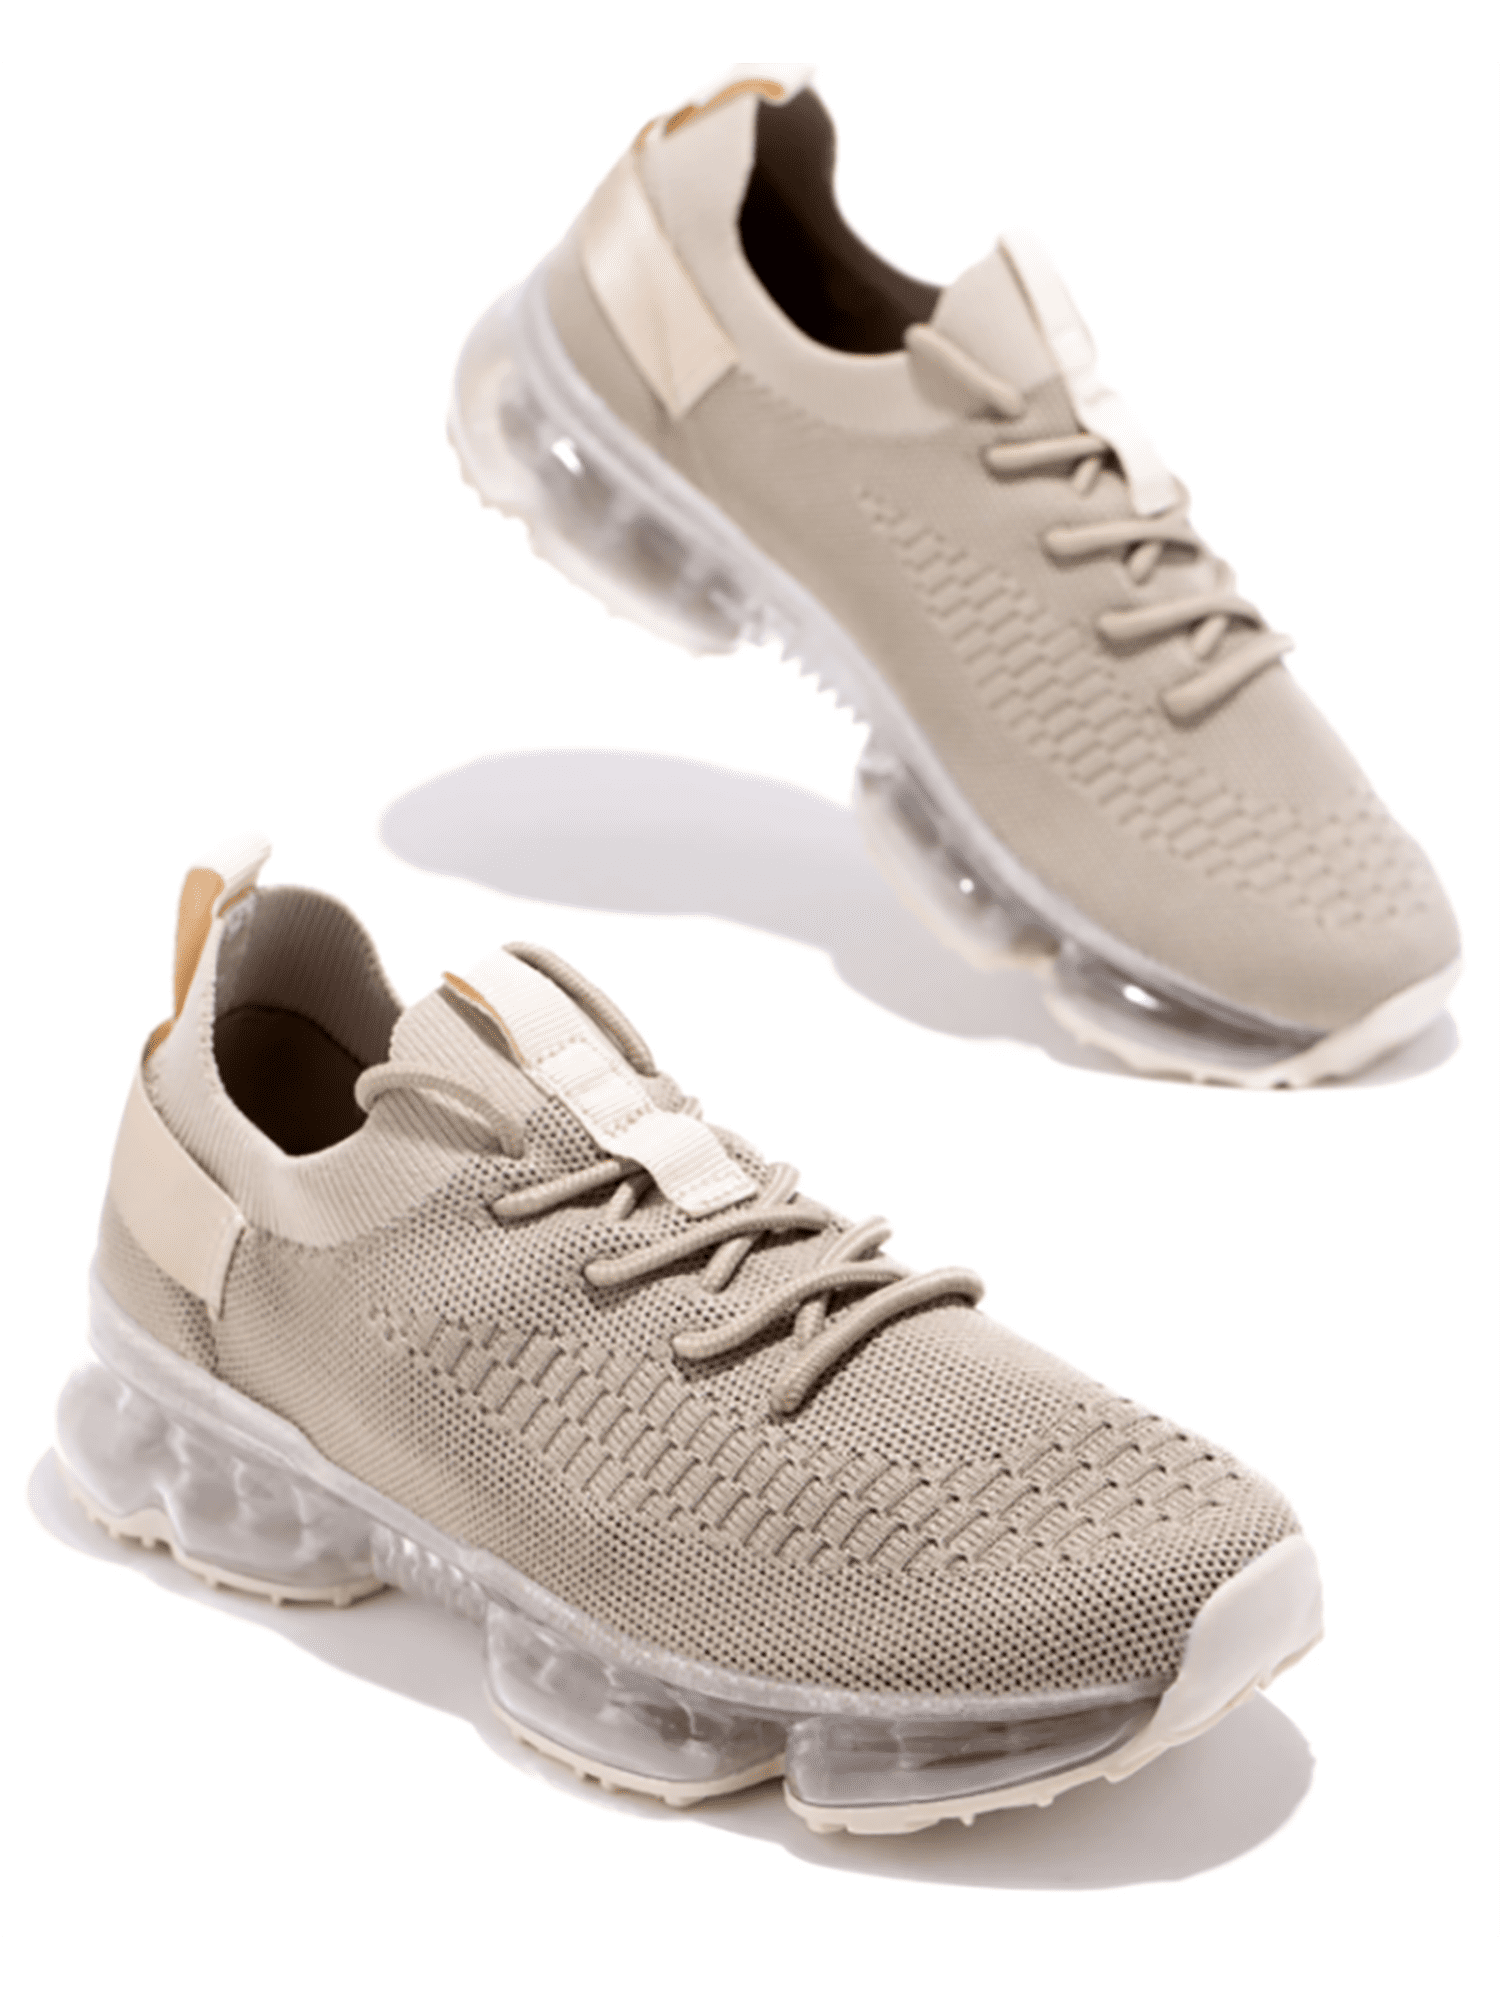 Women's Sports Slip On Running Shoes Air Cushion Jogging Walking Tennis Sneakers